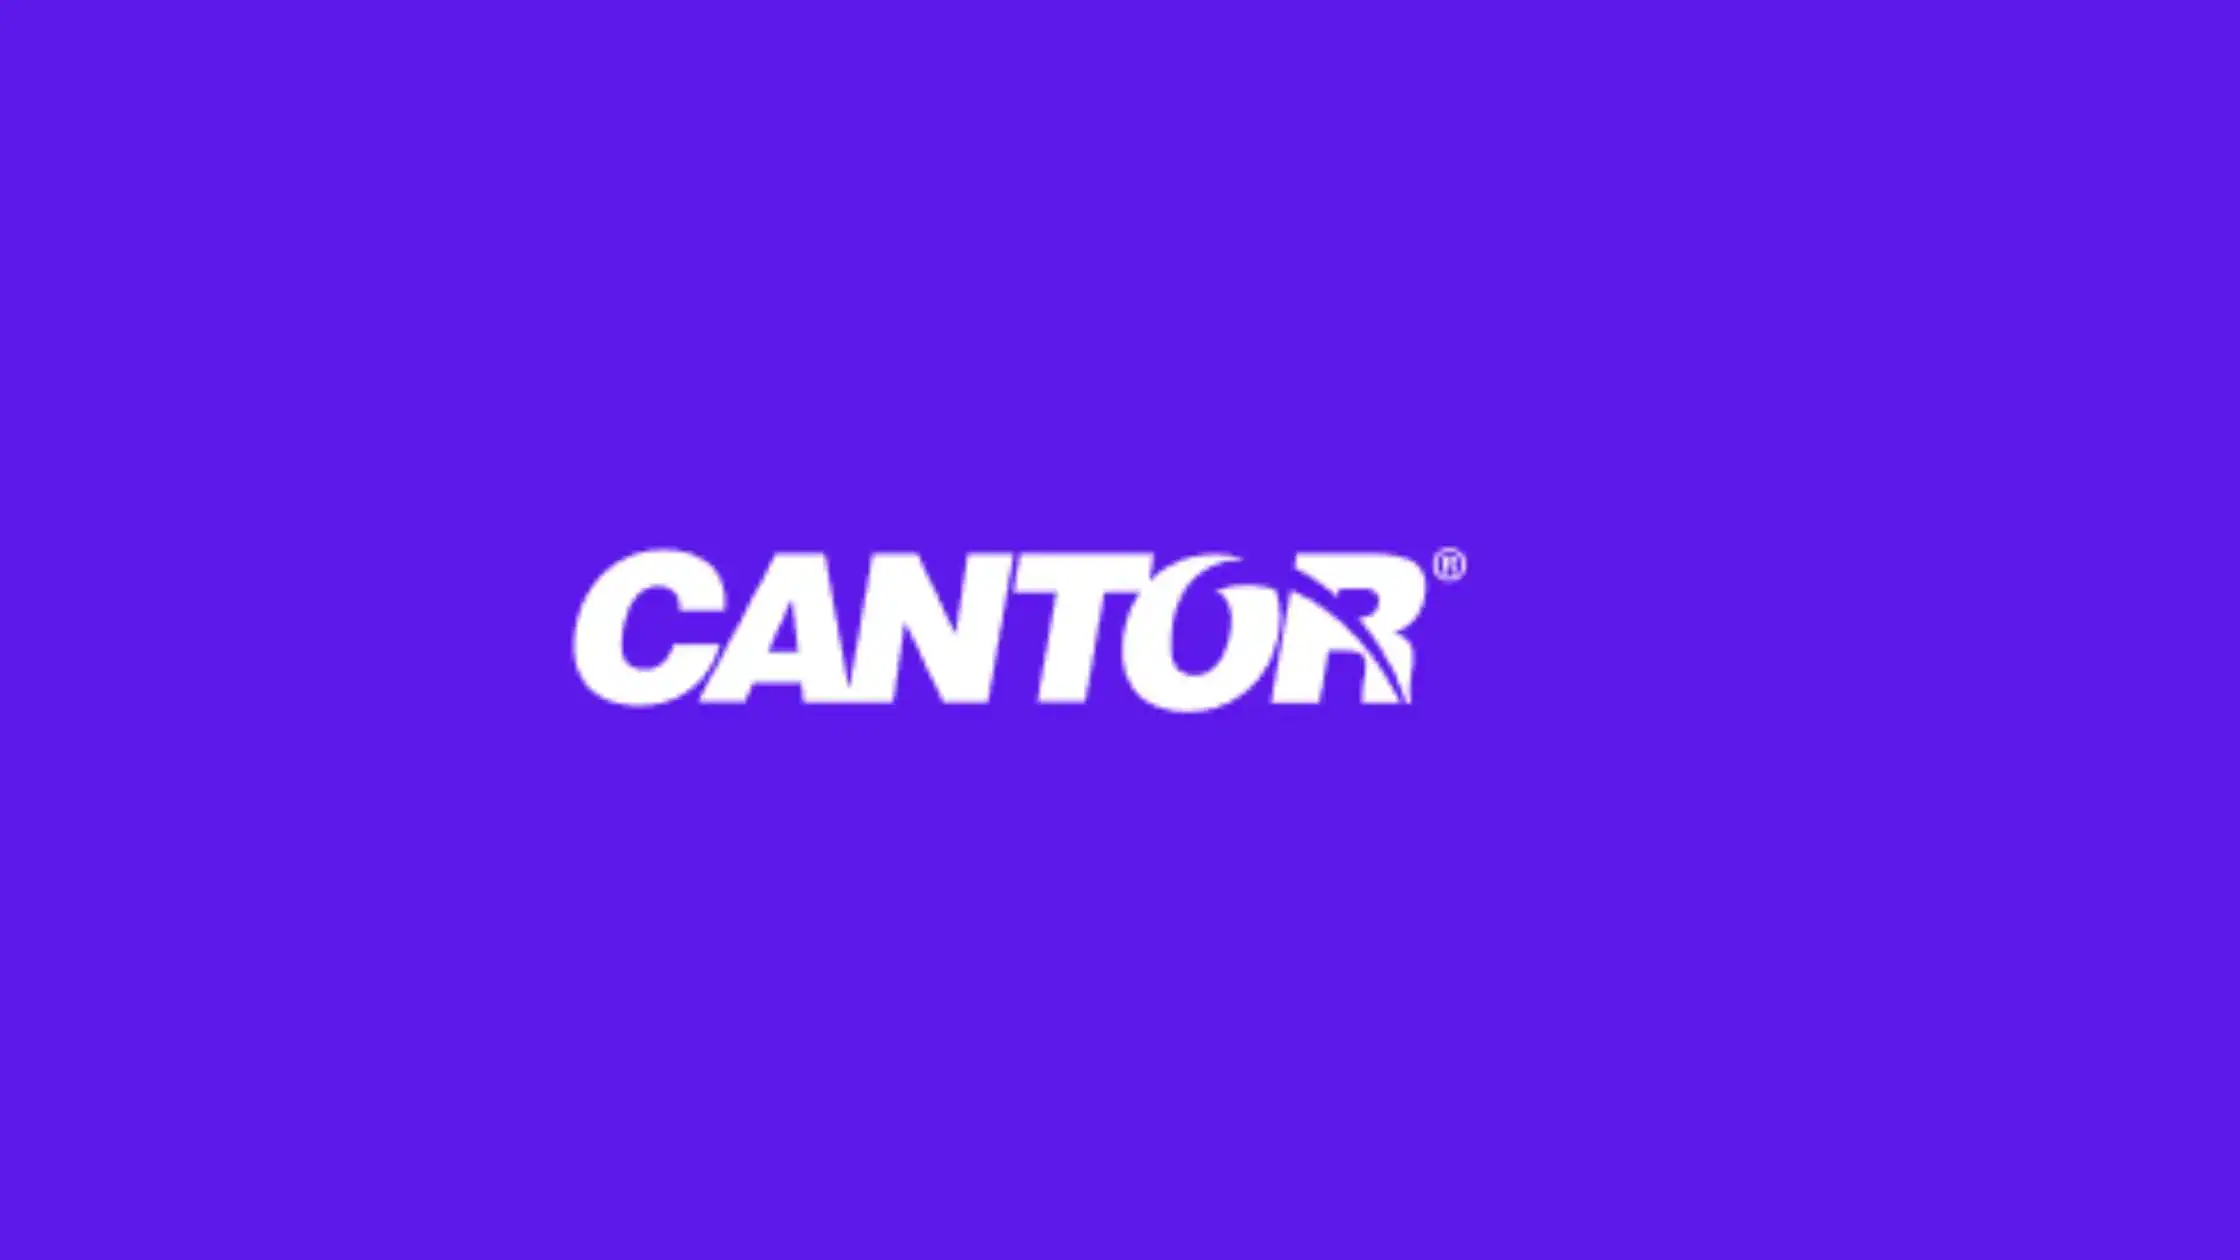 Cantor Descends Flower & Fire, Auxly Cannabis